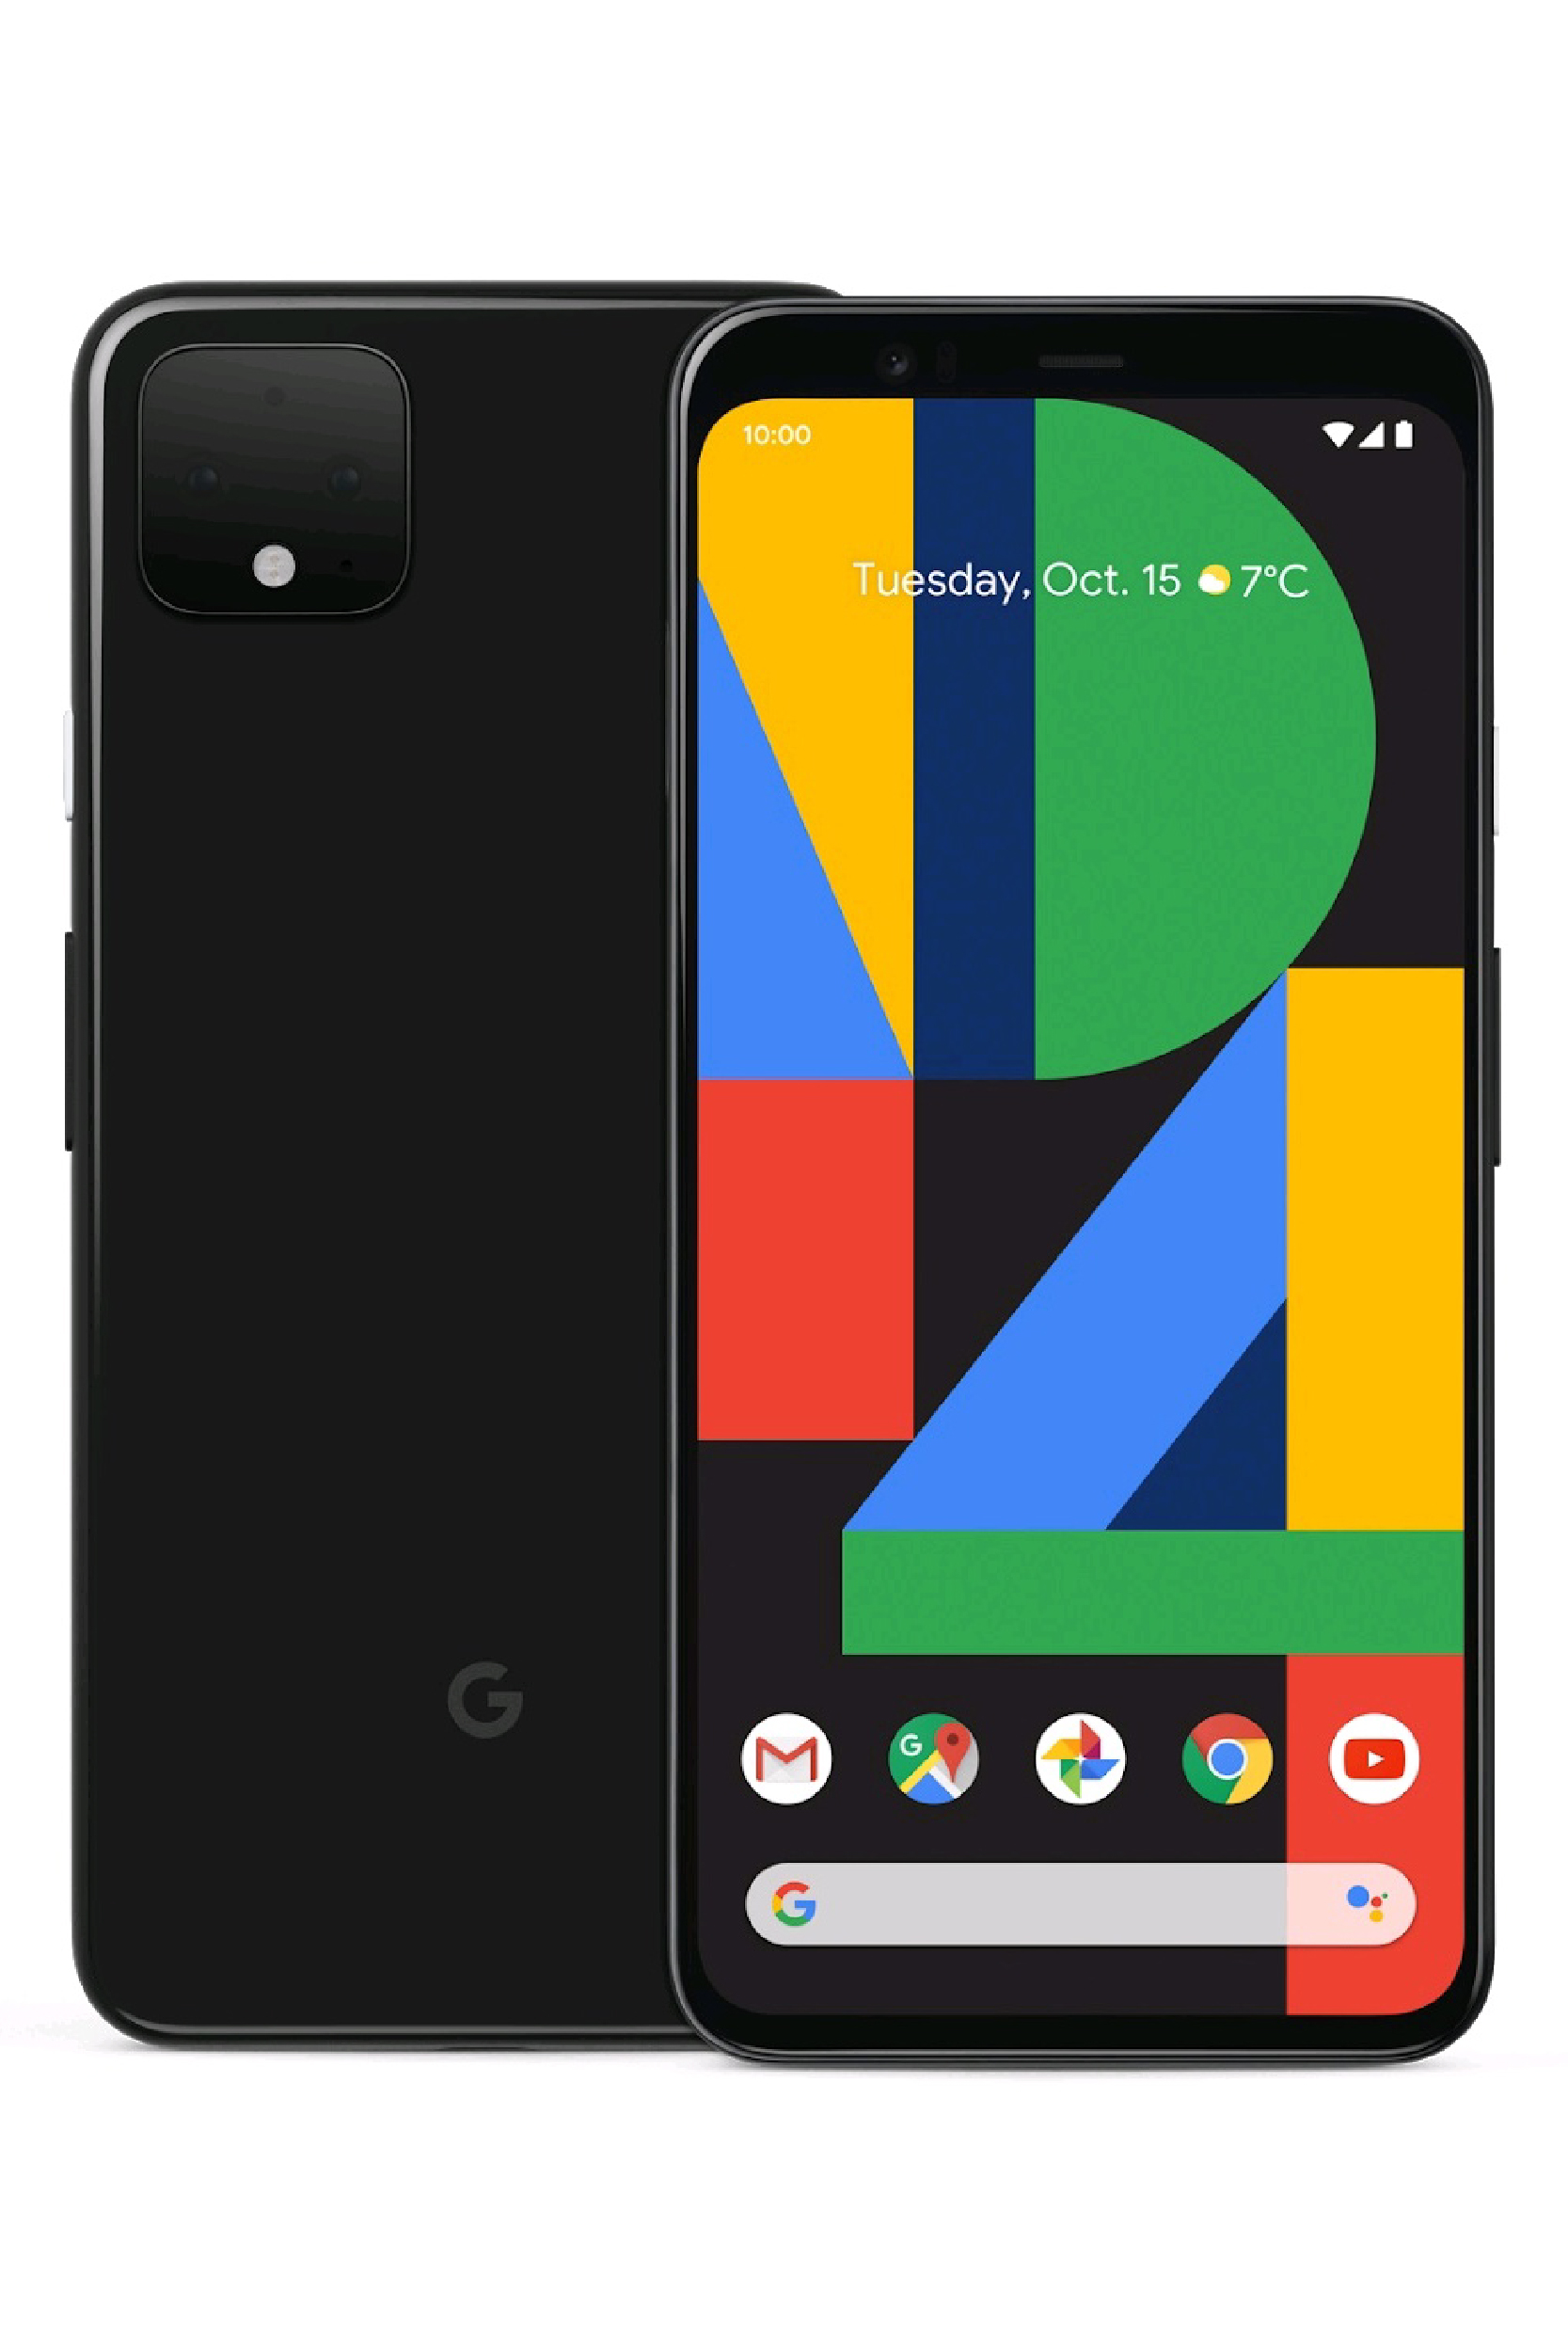 Google Pixel 4 XL Price in Pakistan. The retail price | ProPakistani